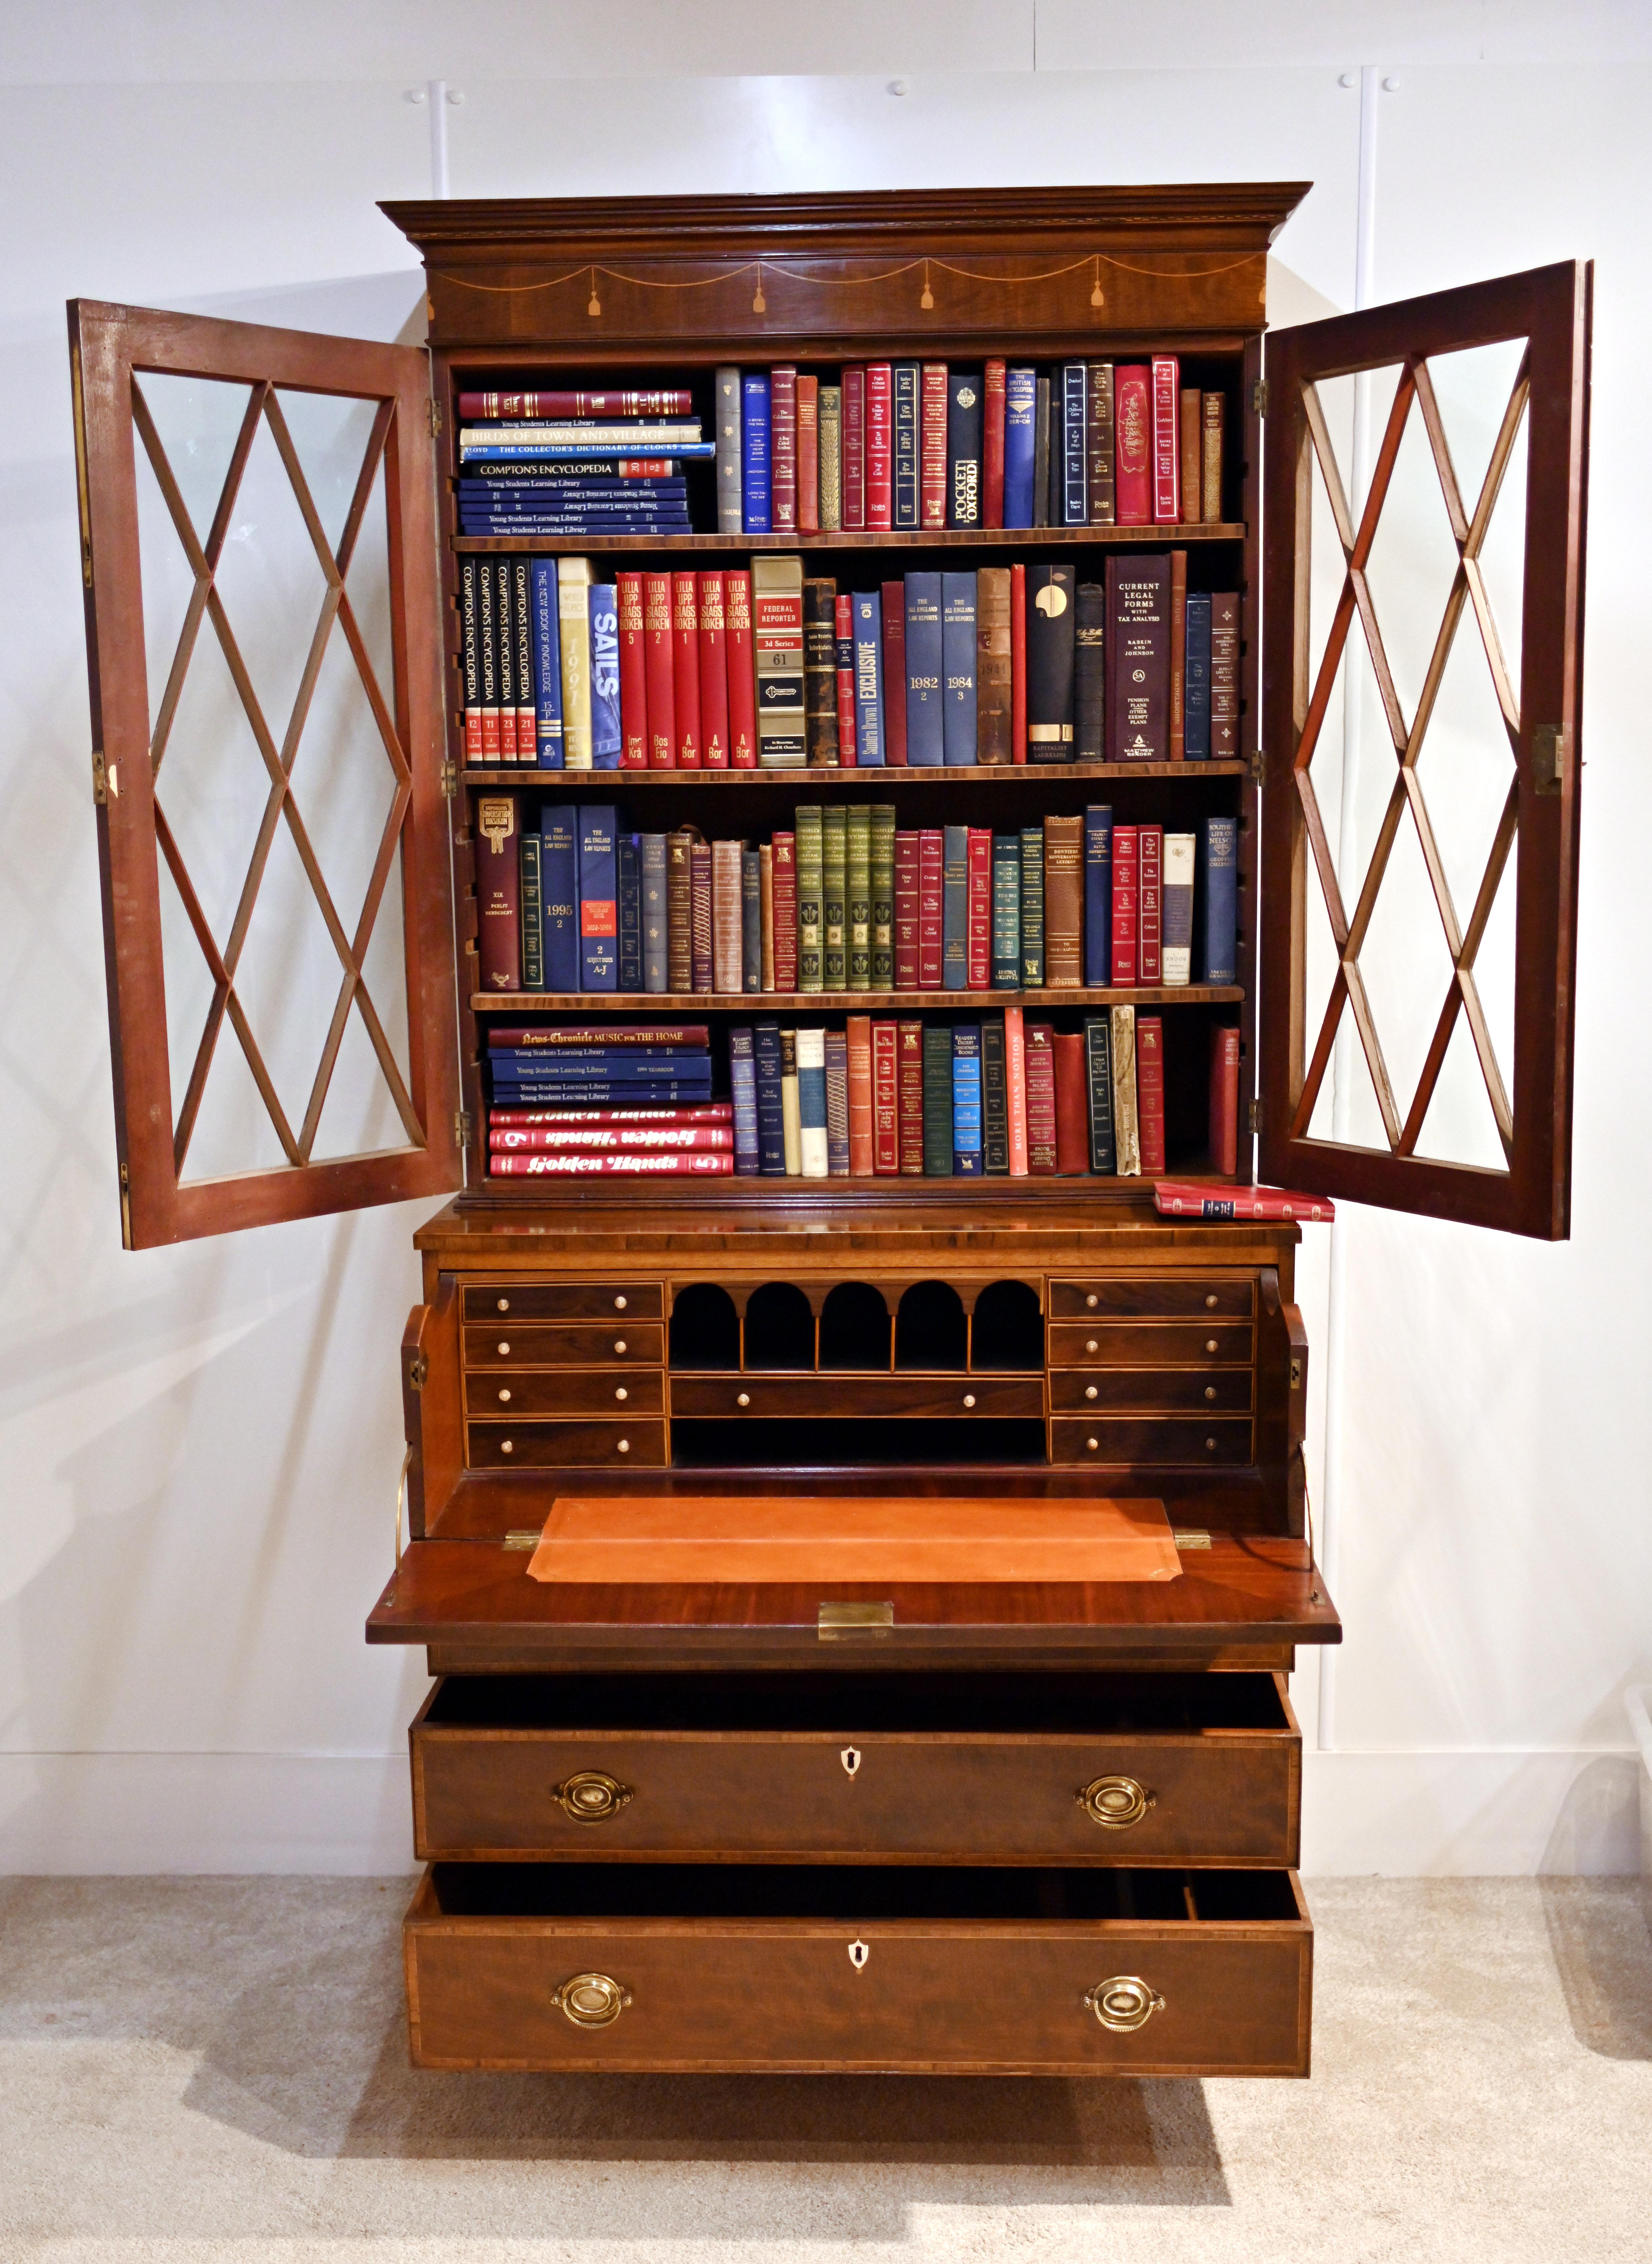 Late 18th Century George III Secretaire Bookcase Mahogany Antique 1790 Desk For Sale